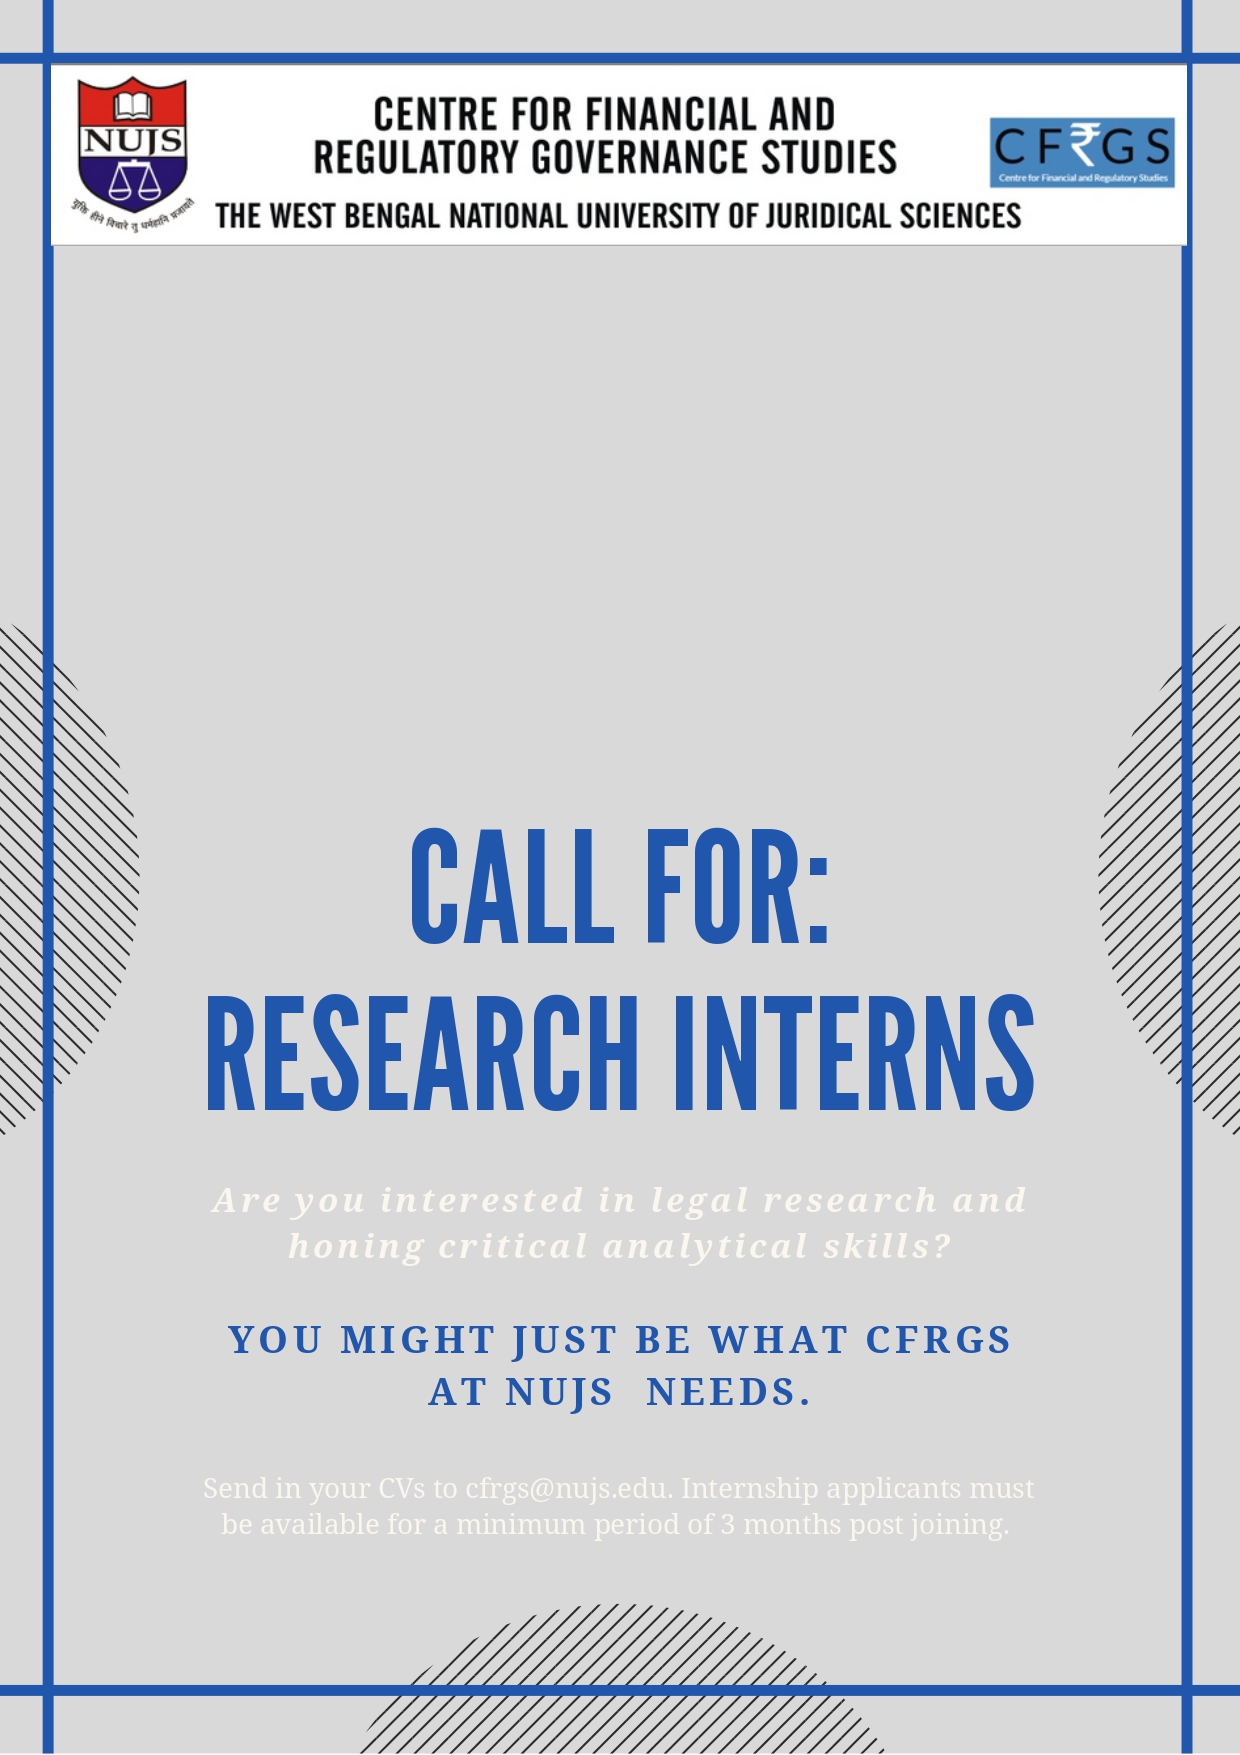 Research Interns